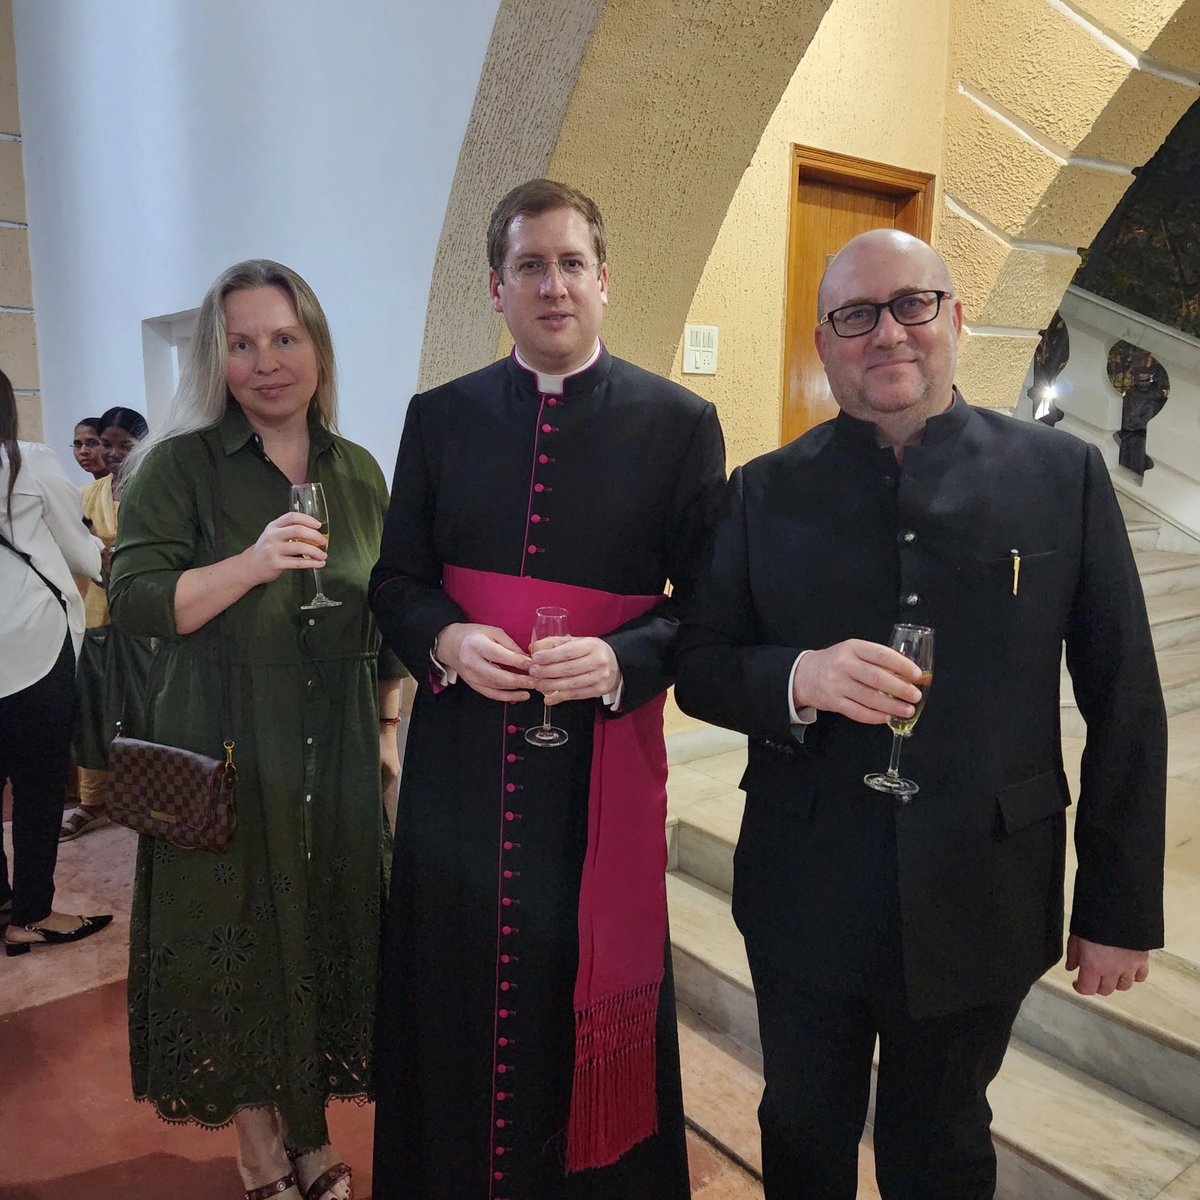 Easter Saturday at the Apostolic Nunciature in New Delhi.